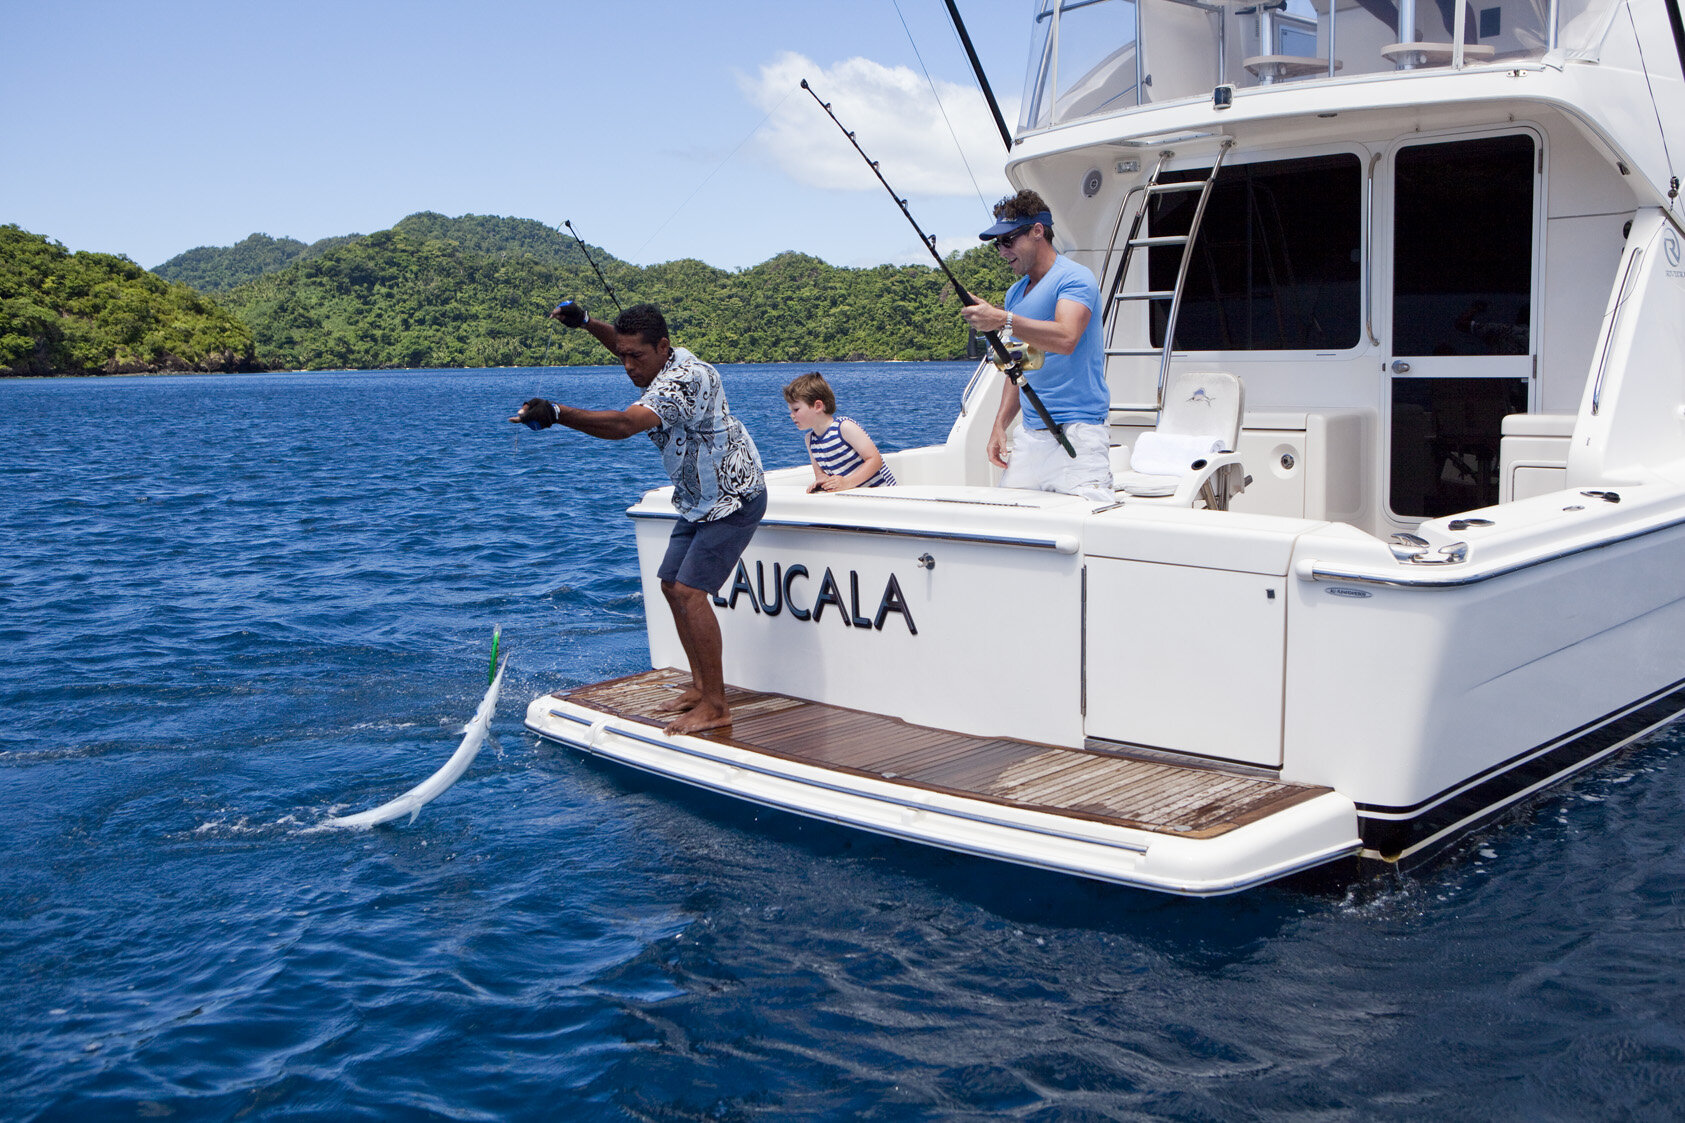 H-Fiji-Laucala-Fishing-Boat.jpg